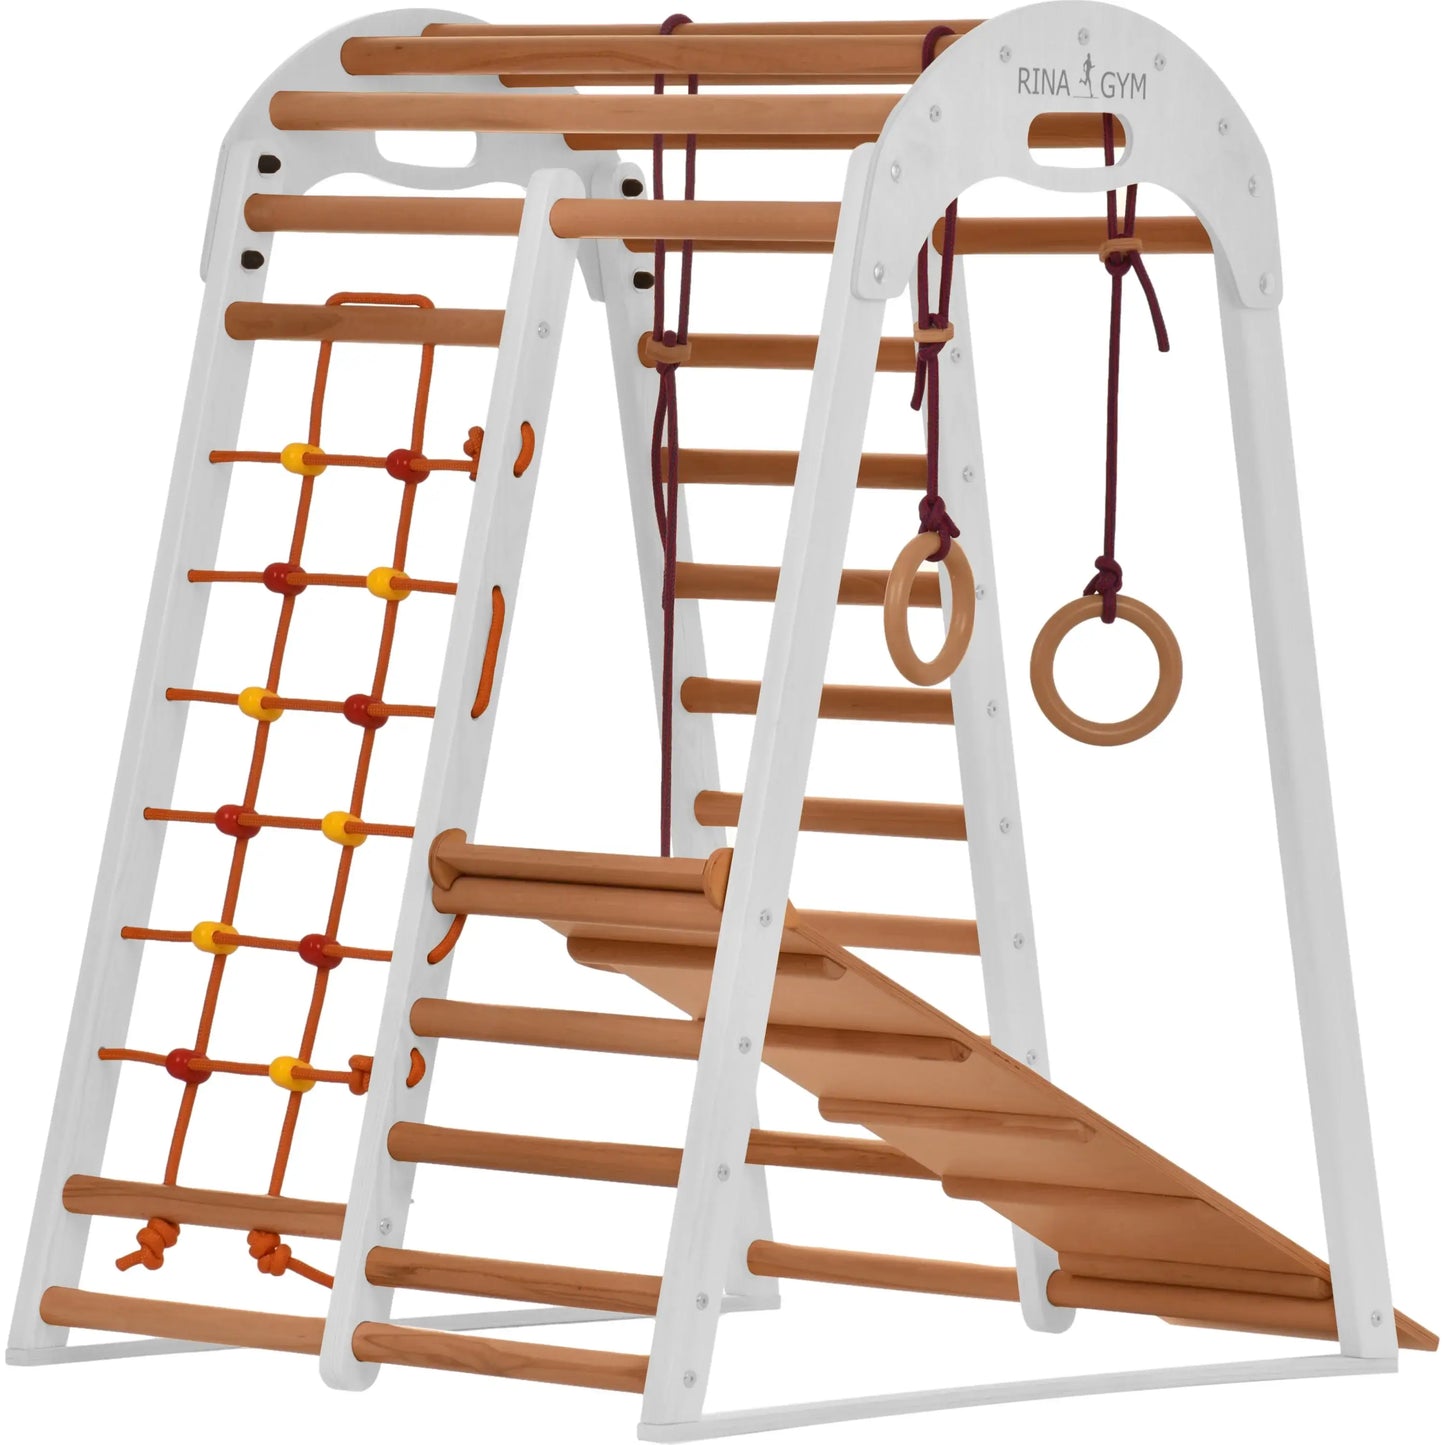 Binnenspeeltuin wit van hout - klimnet, zweedse ladder, ringen, glijbaan